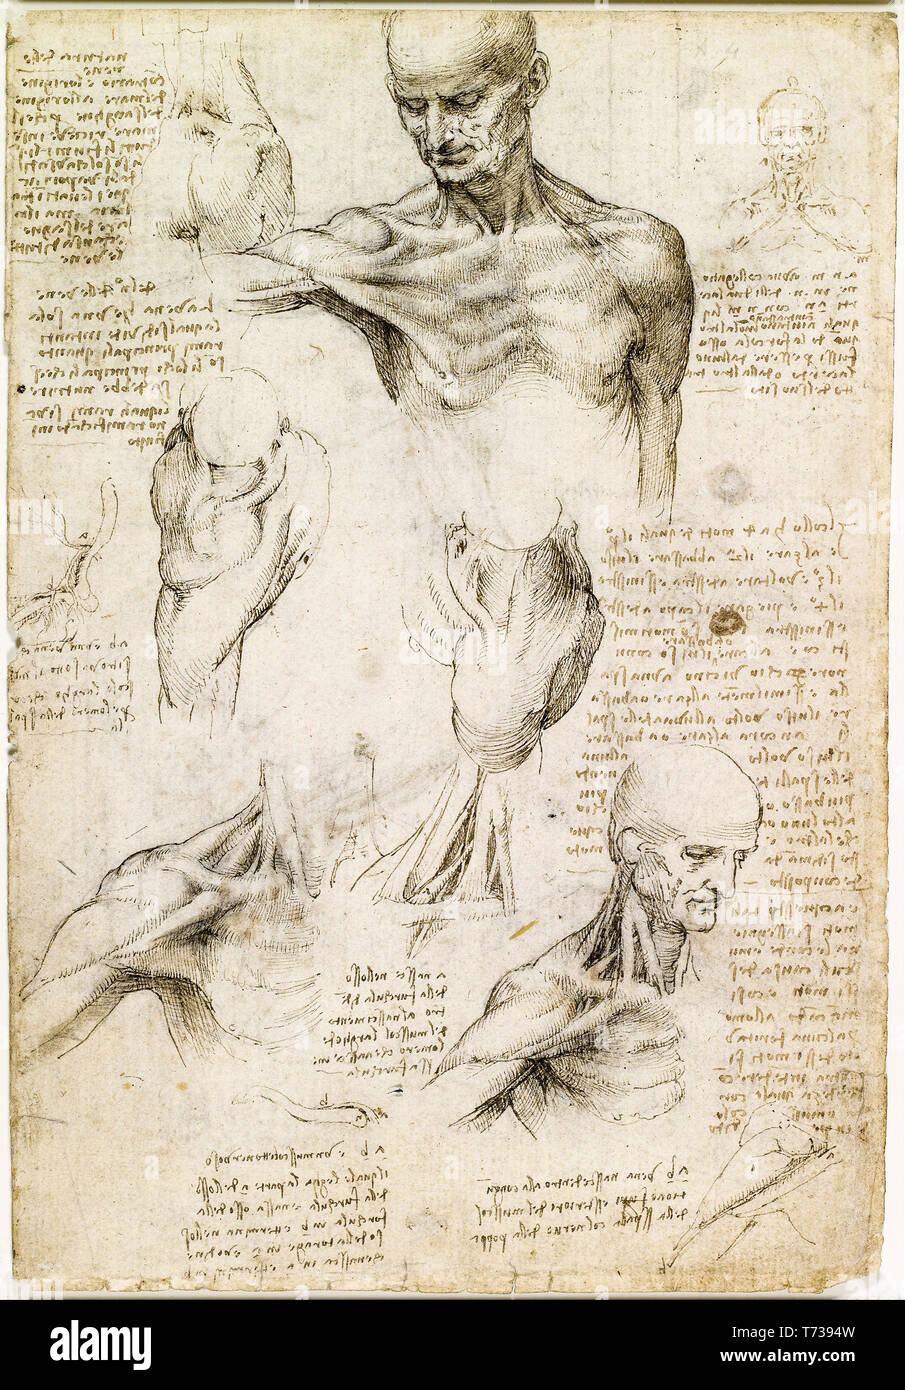 Anatomical drawing, Superficial anatomy of the shoulder and neck, Leonardo da Vinci, c. 1510 Stock Photo